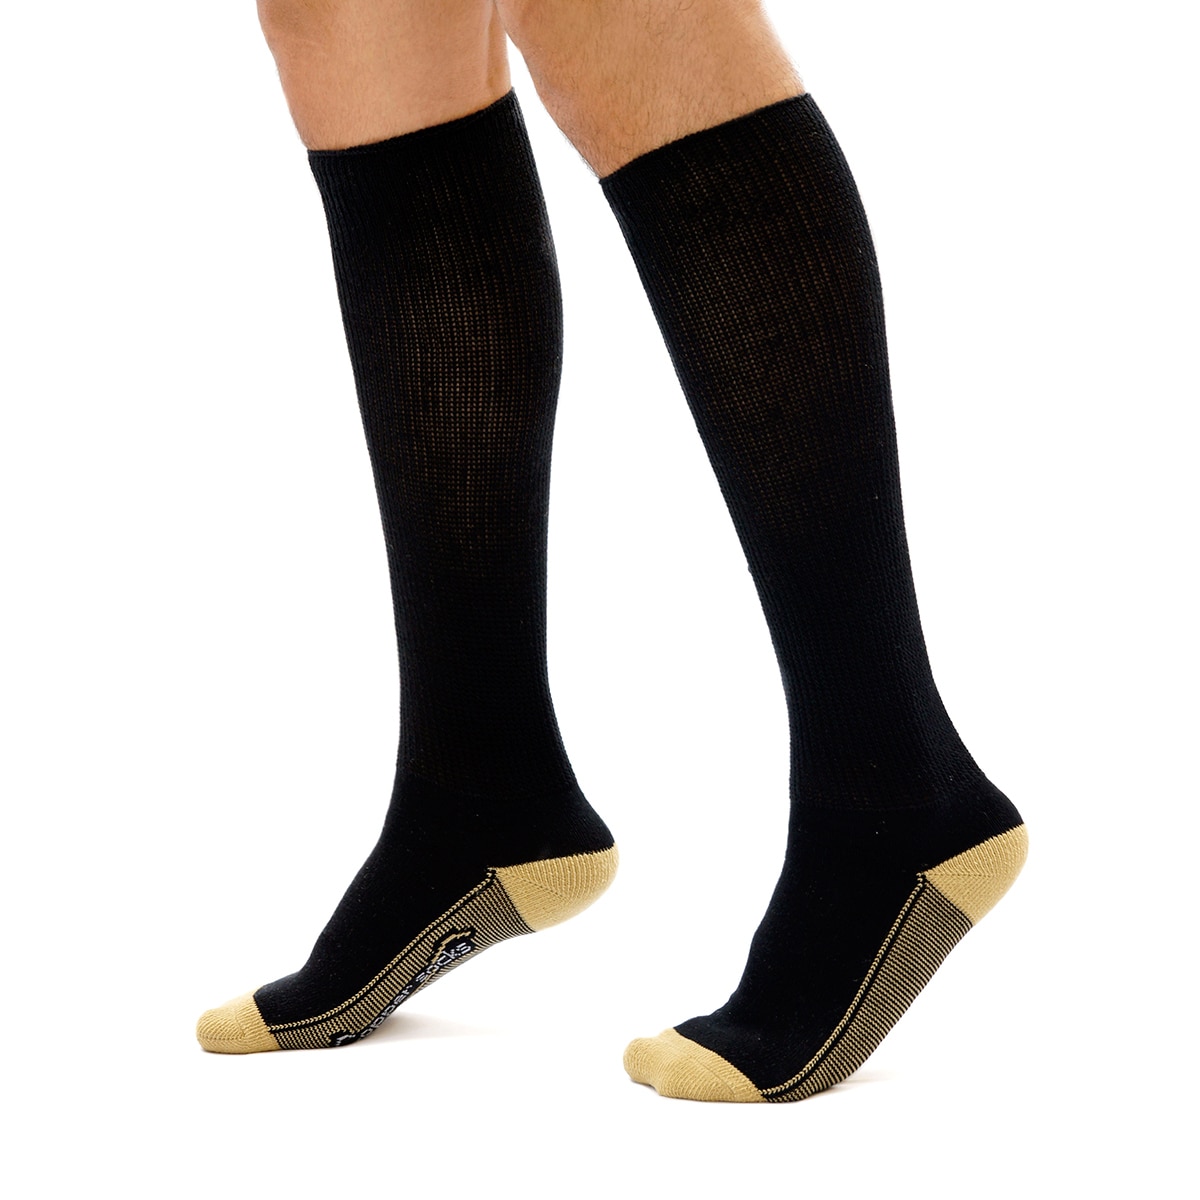 Copper Socks, Calcetas para Diabéticos (3 Pares)